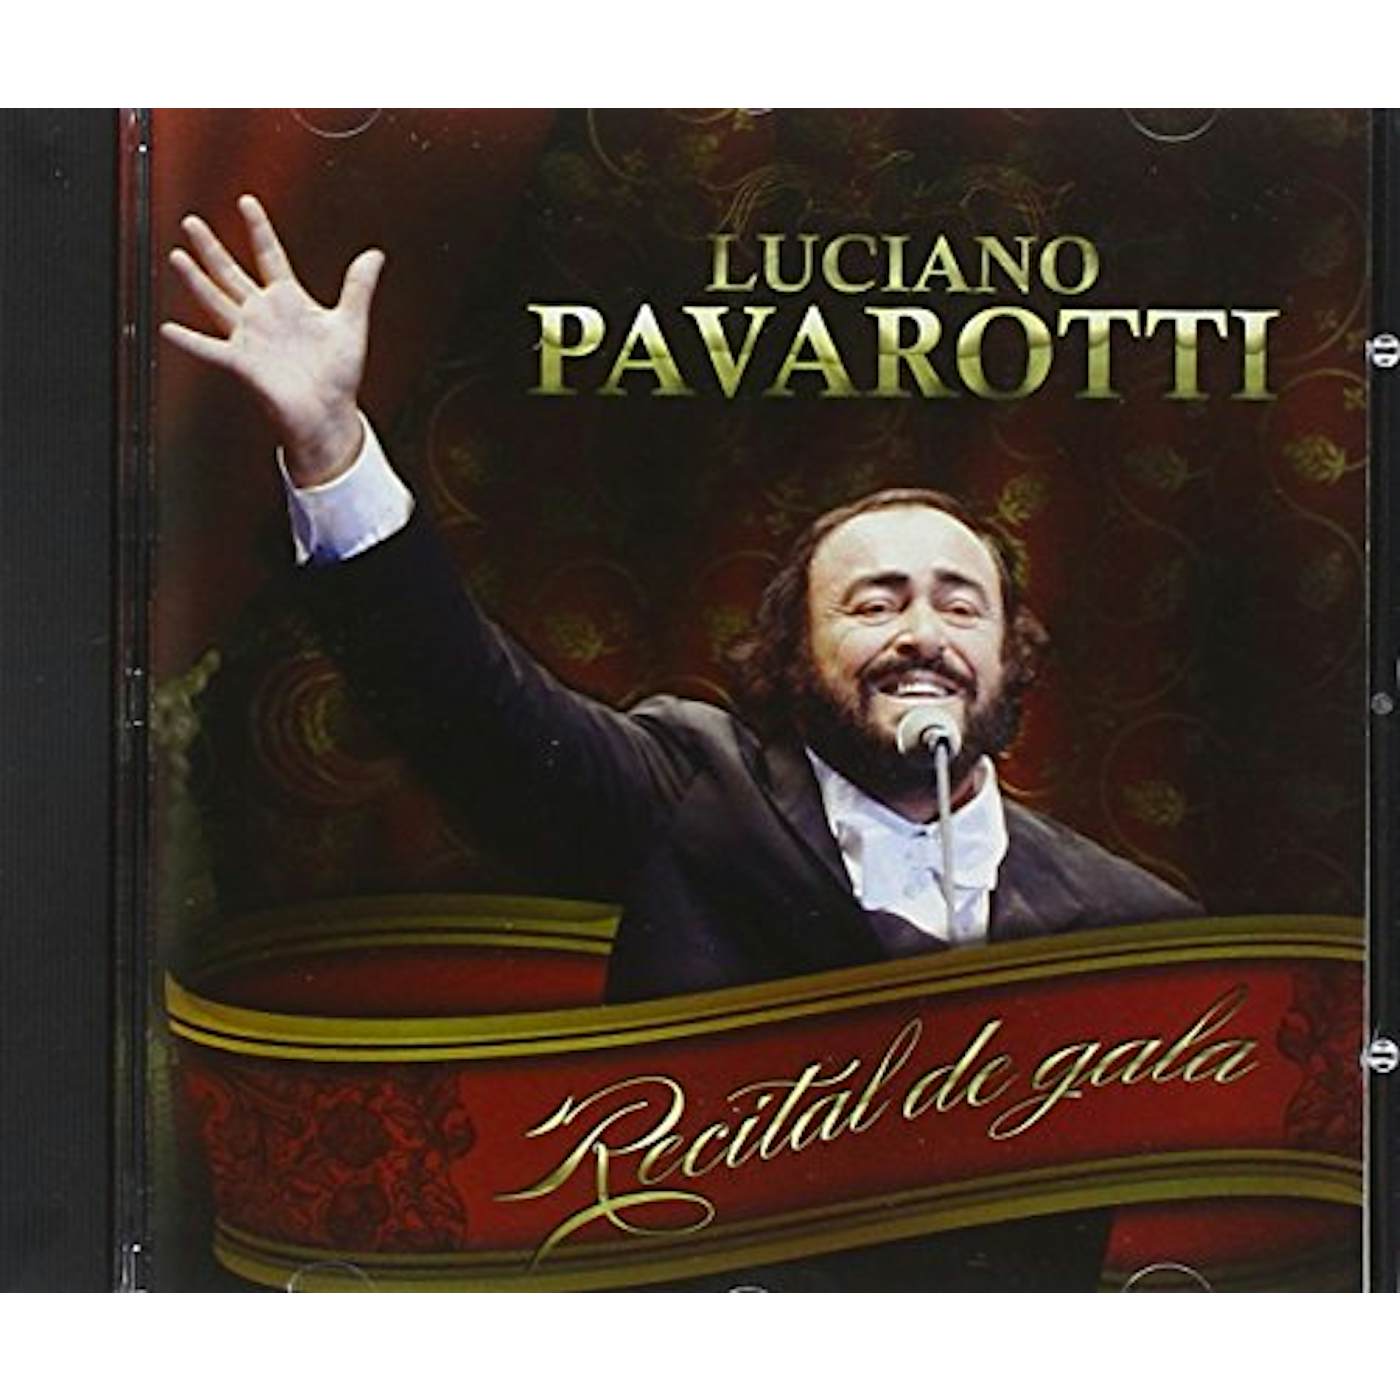 Luciano Pavarotti RECITAL DE GALA CD